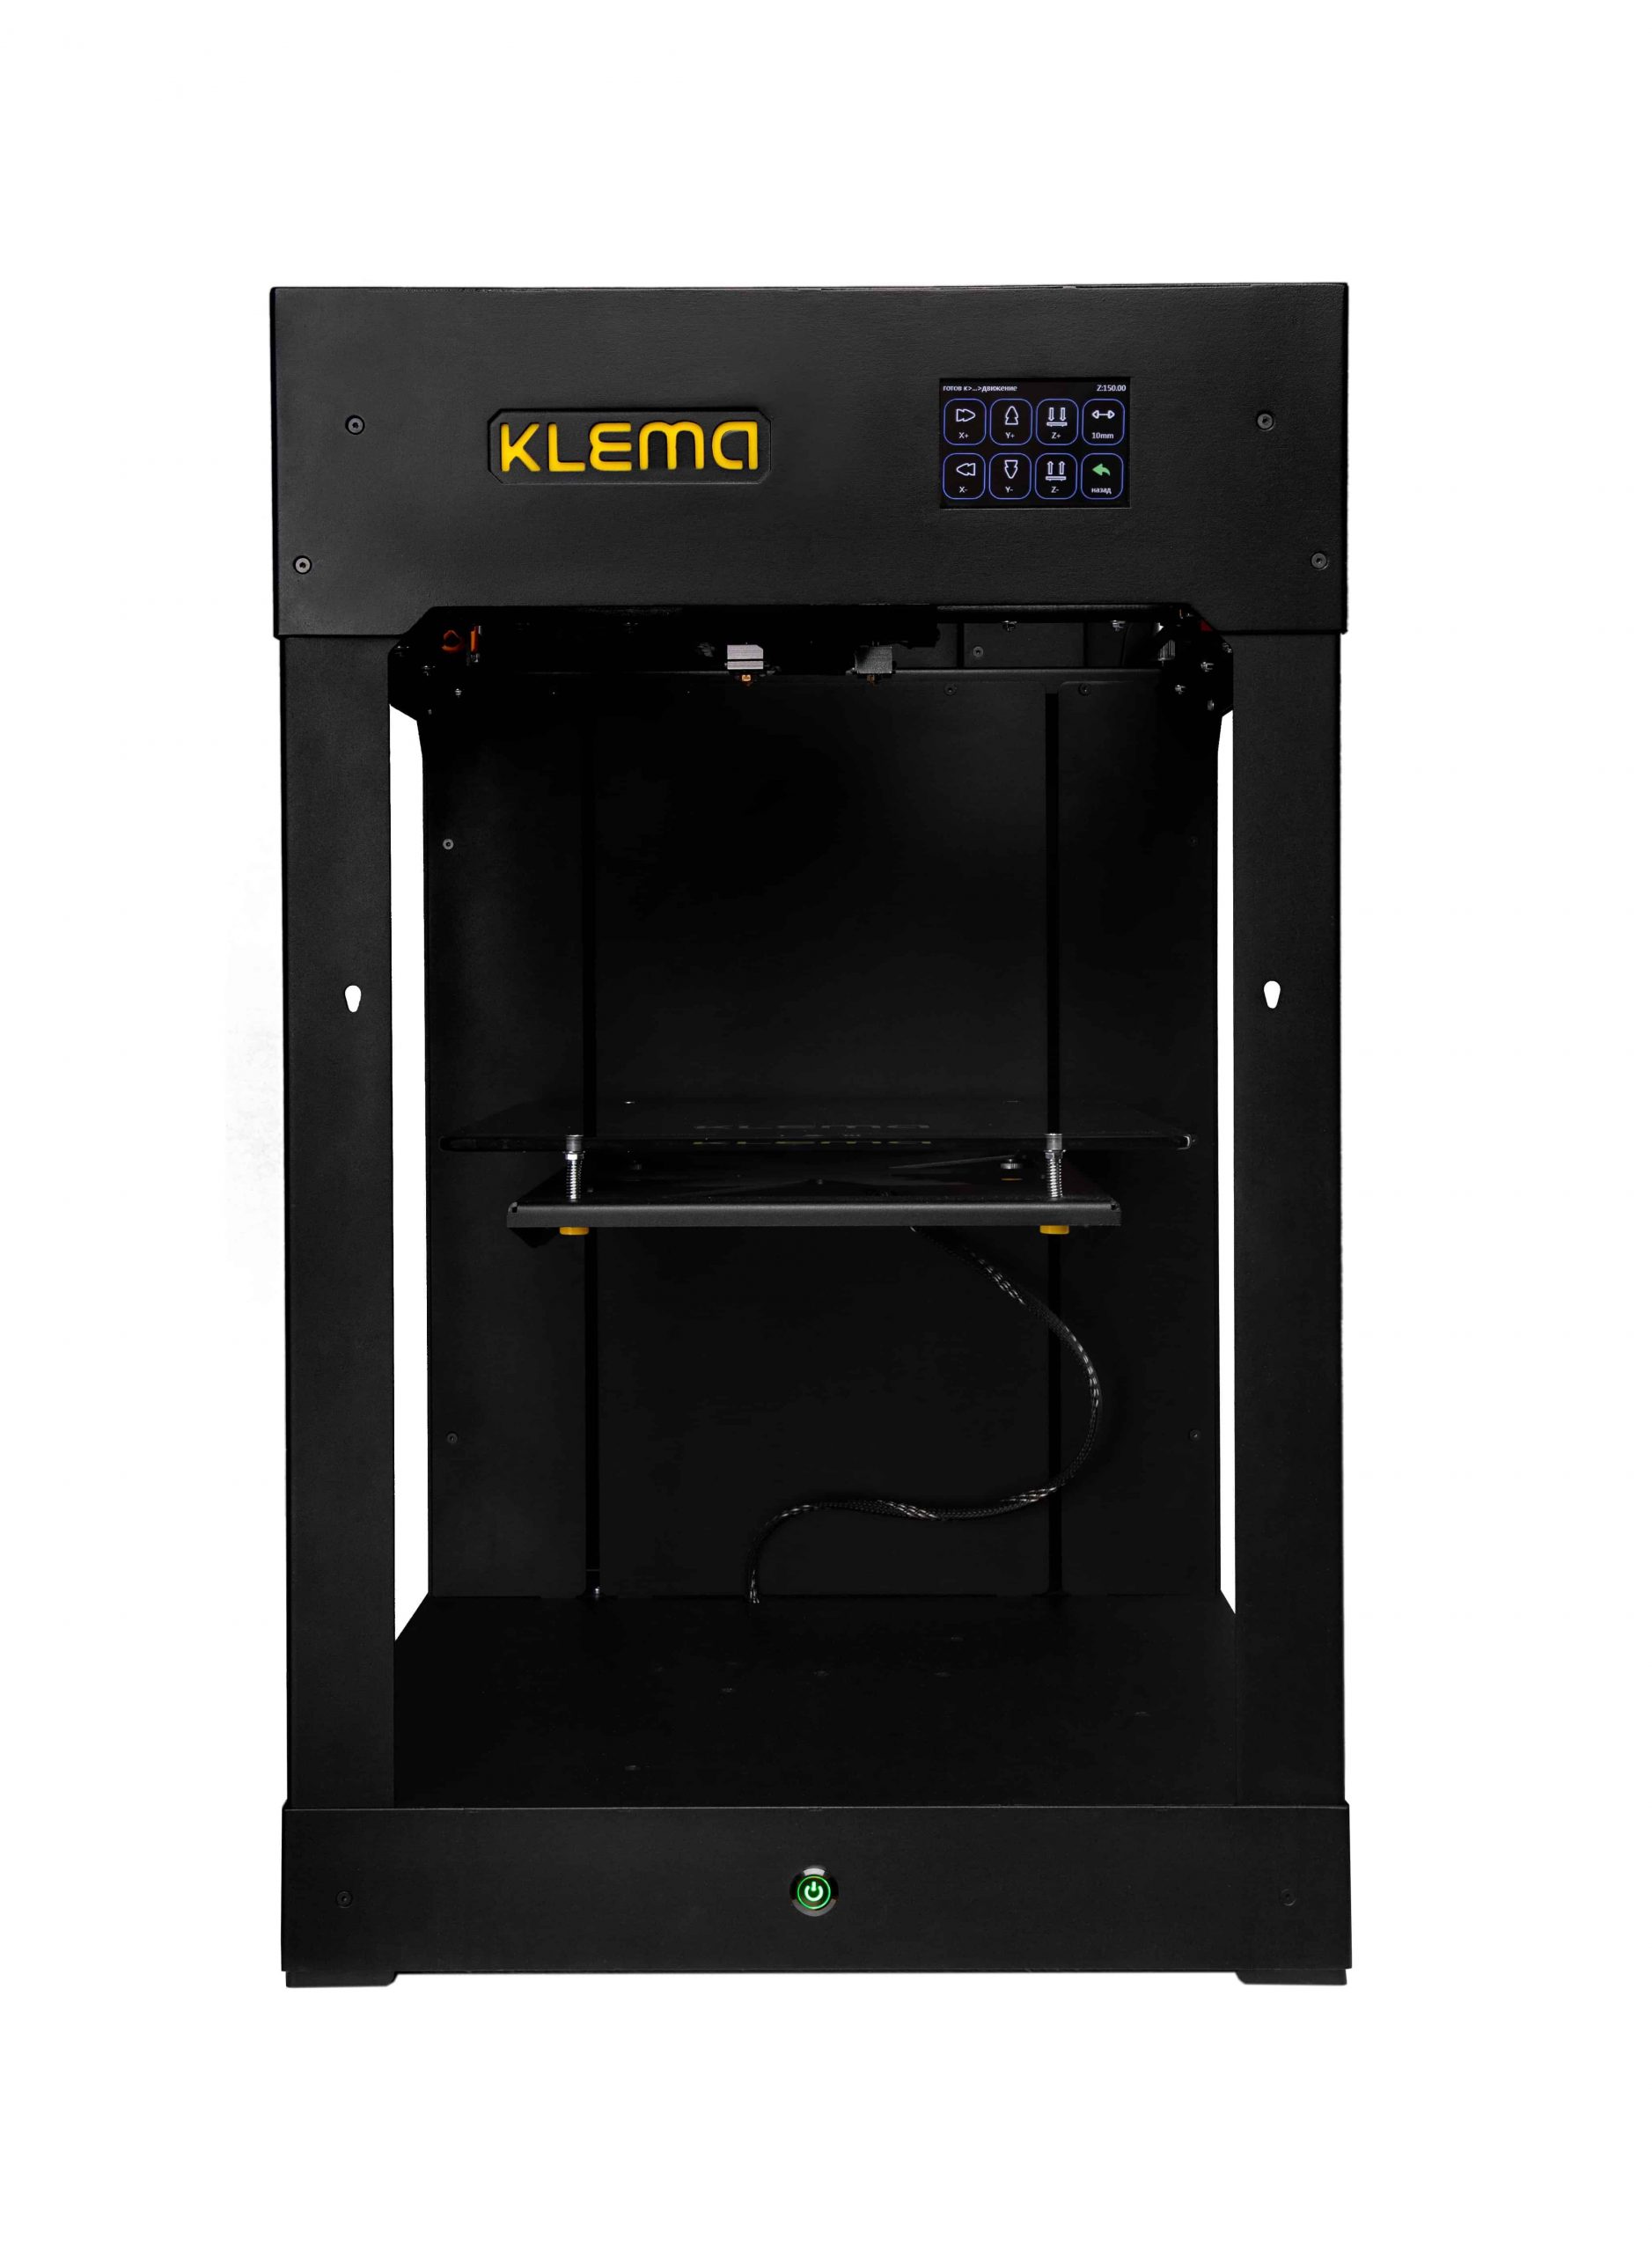 3D printer KLEMA 250 buy a reliable universal printer